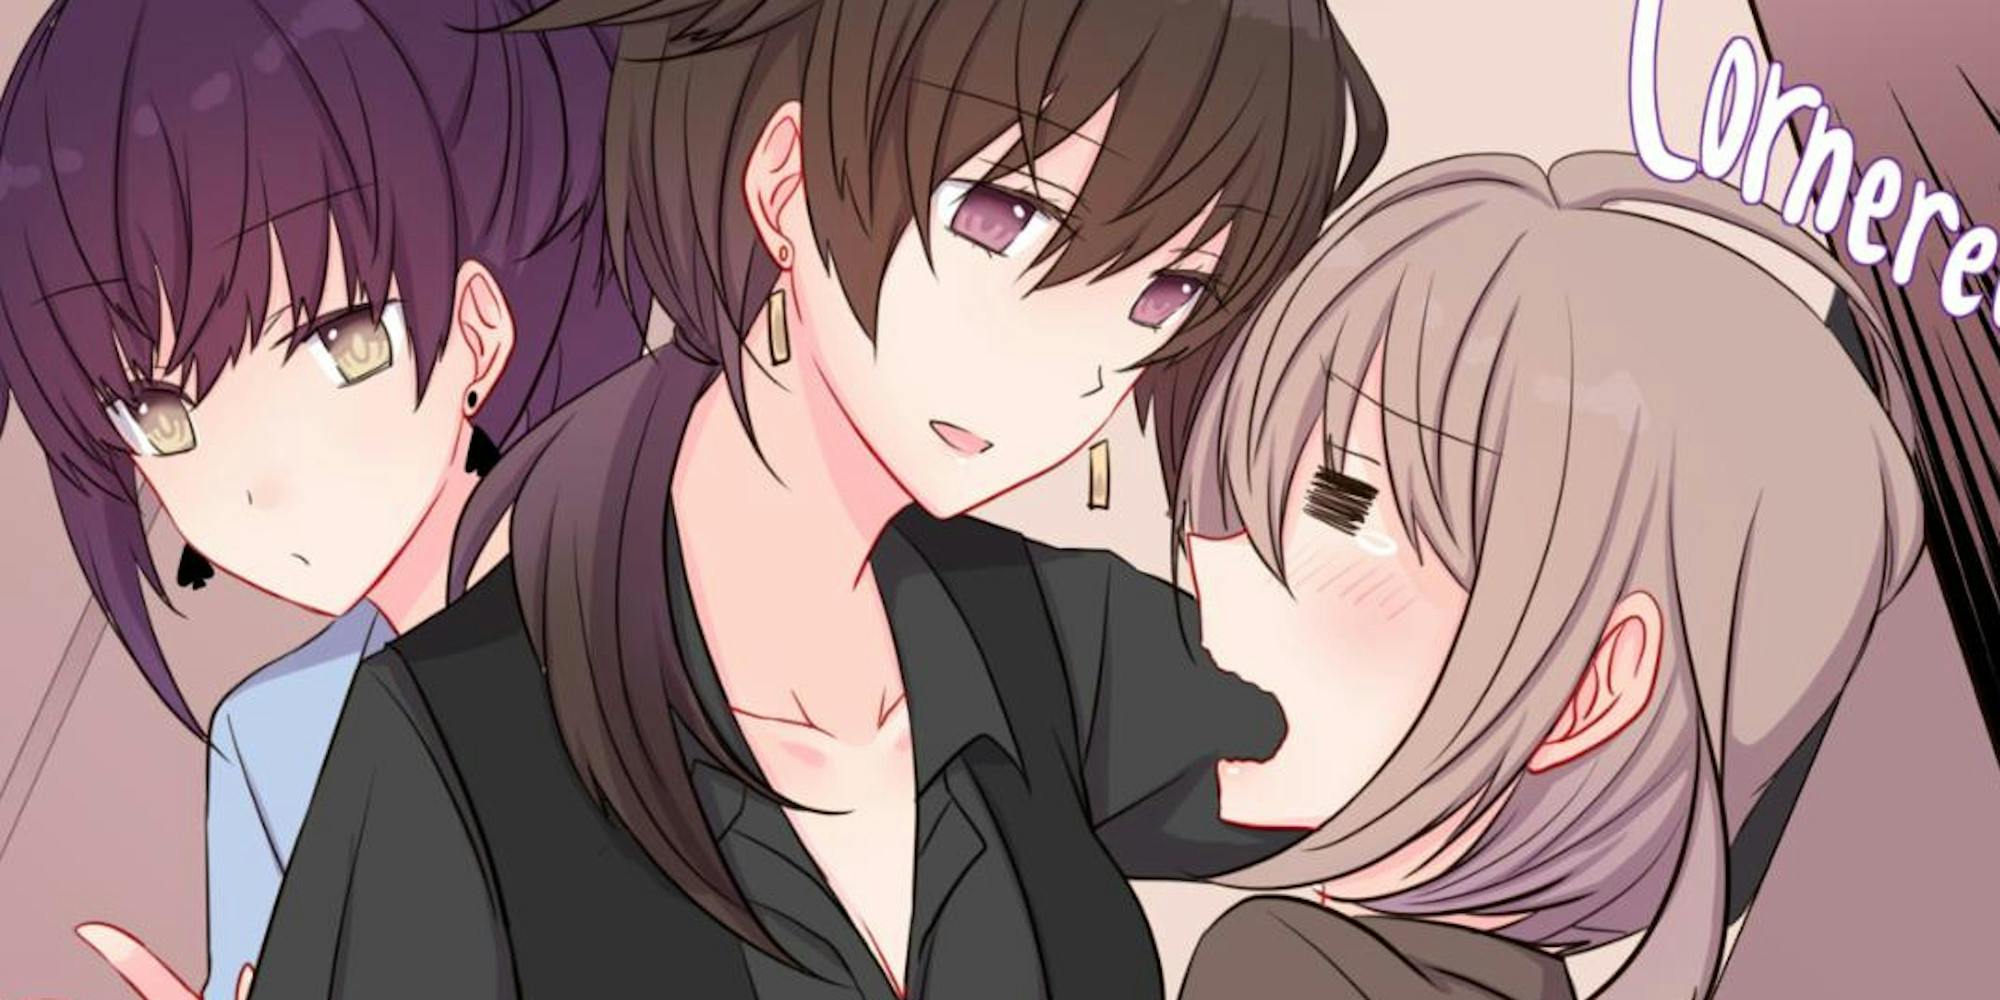 Hard Lesbian Hentai - Lesbian Hentai: Best Yuri Hentai to Read and Stream Online